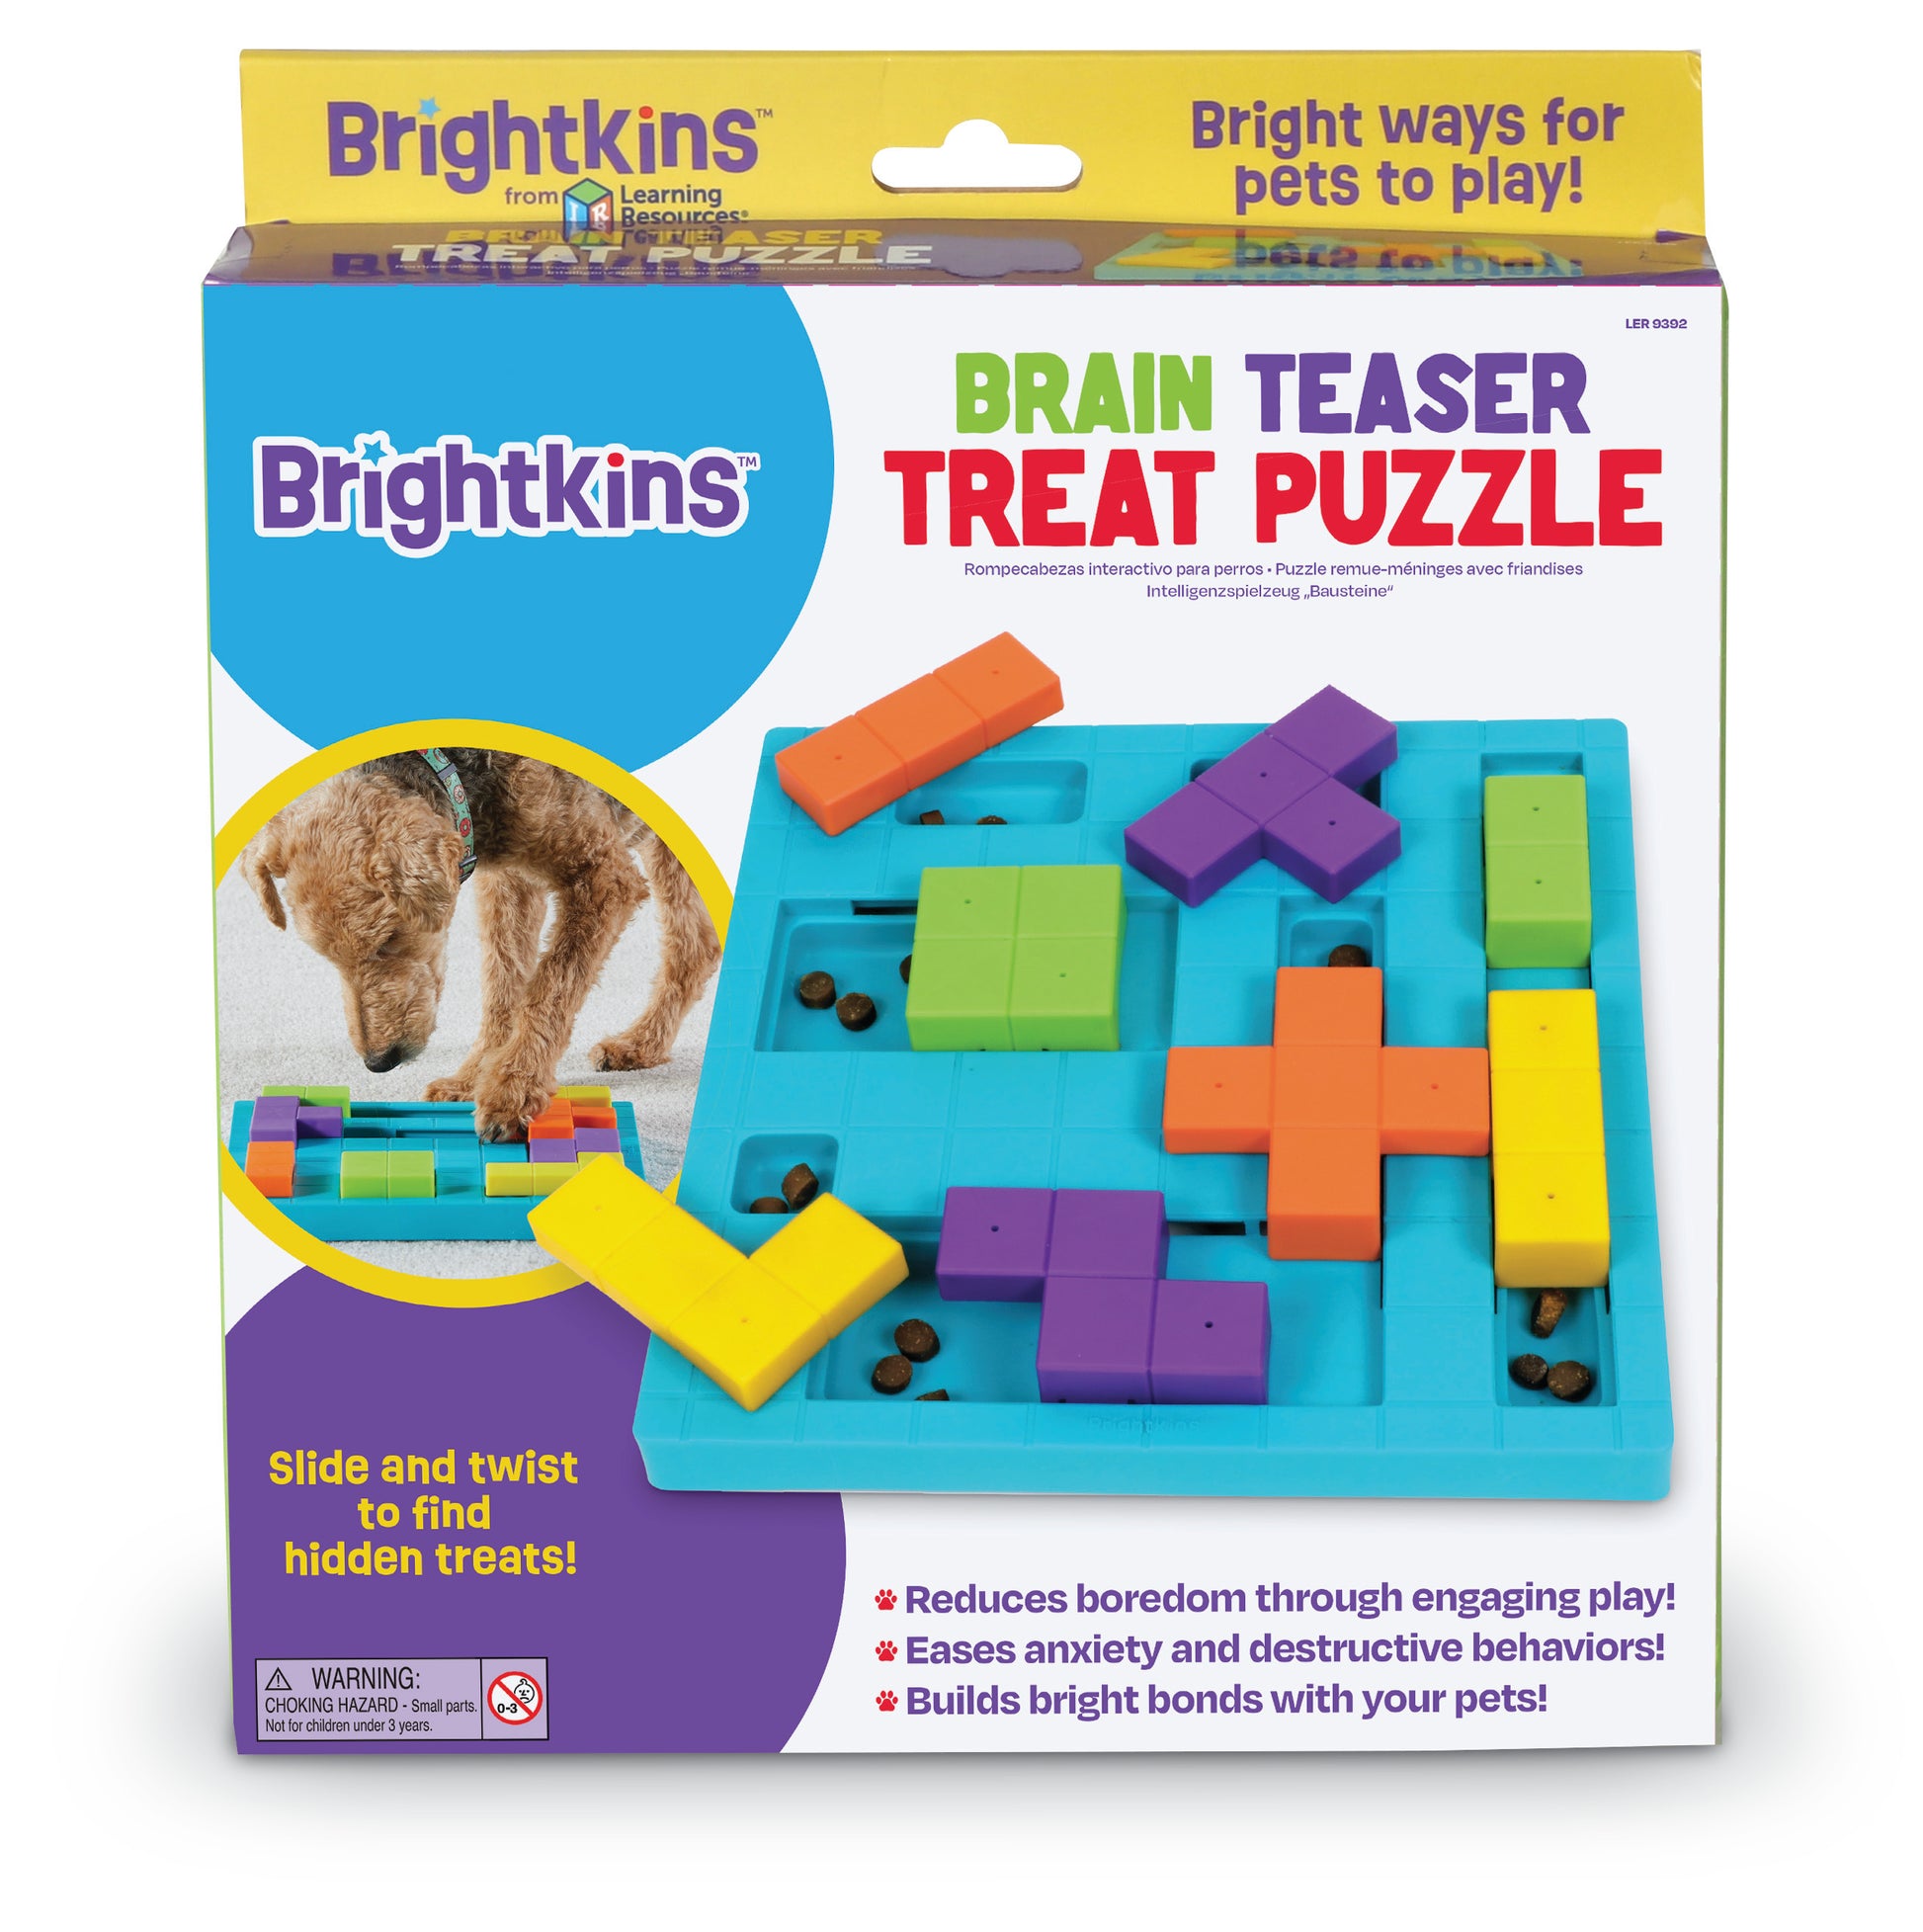 Brightkins Brainteaser Treat Puzzle